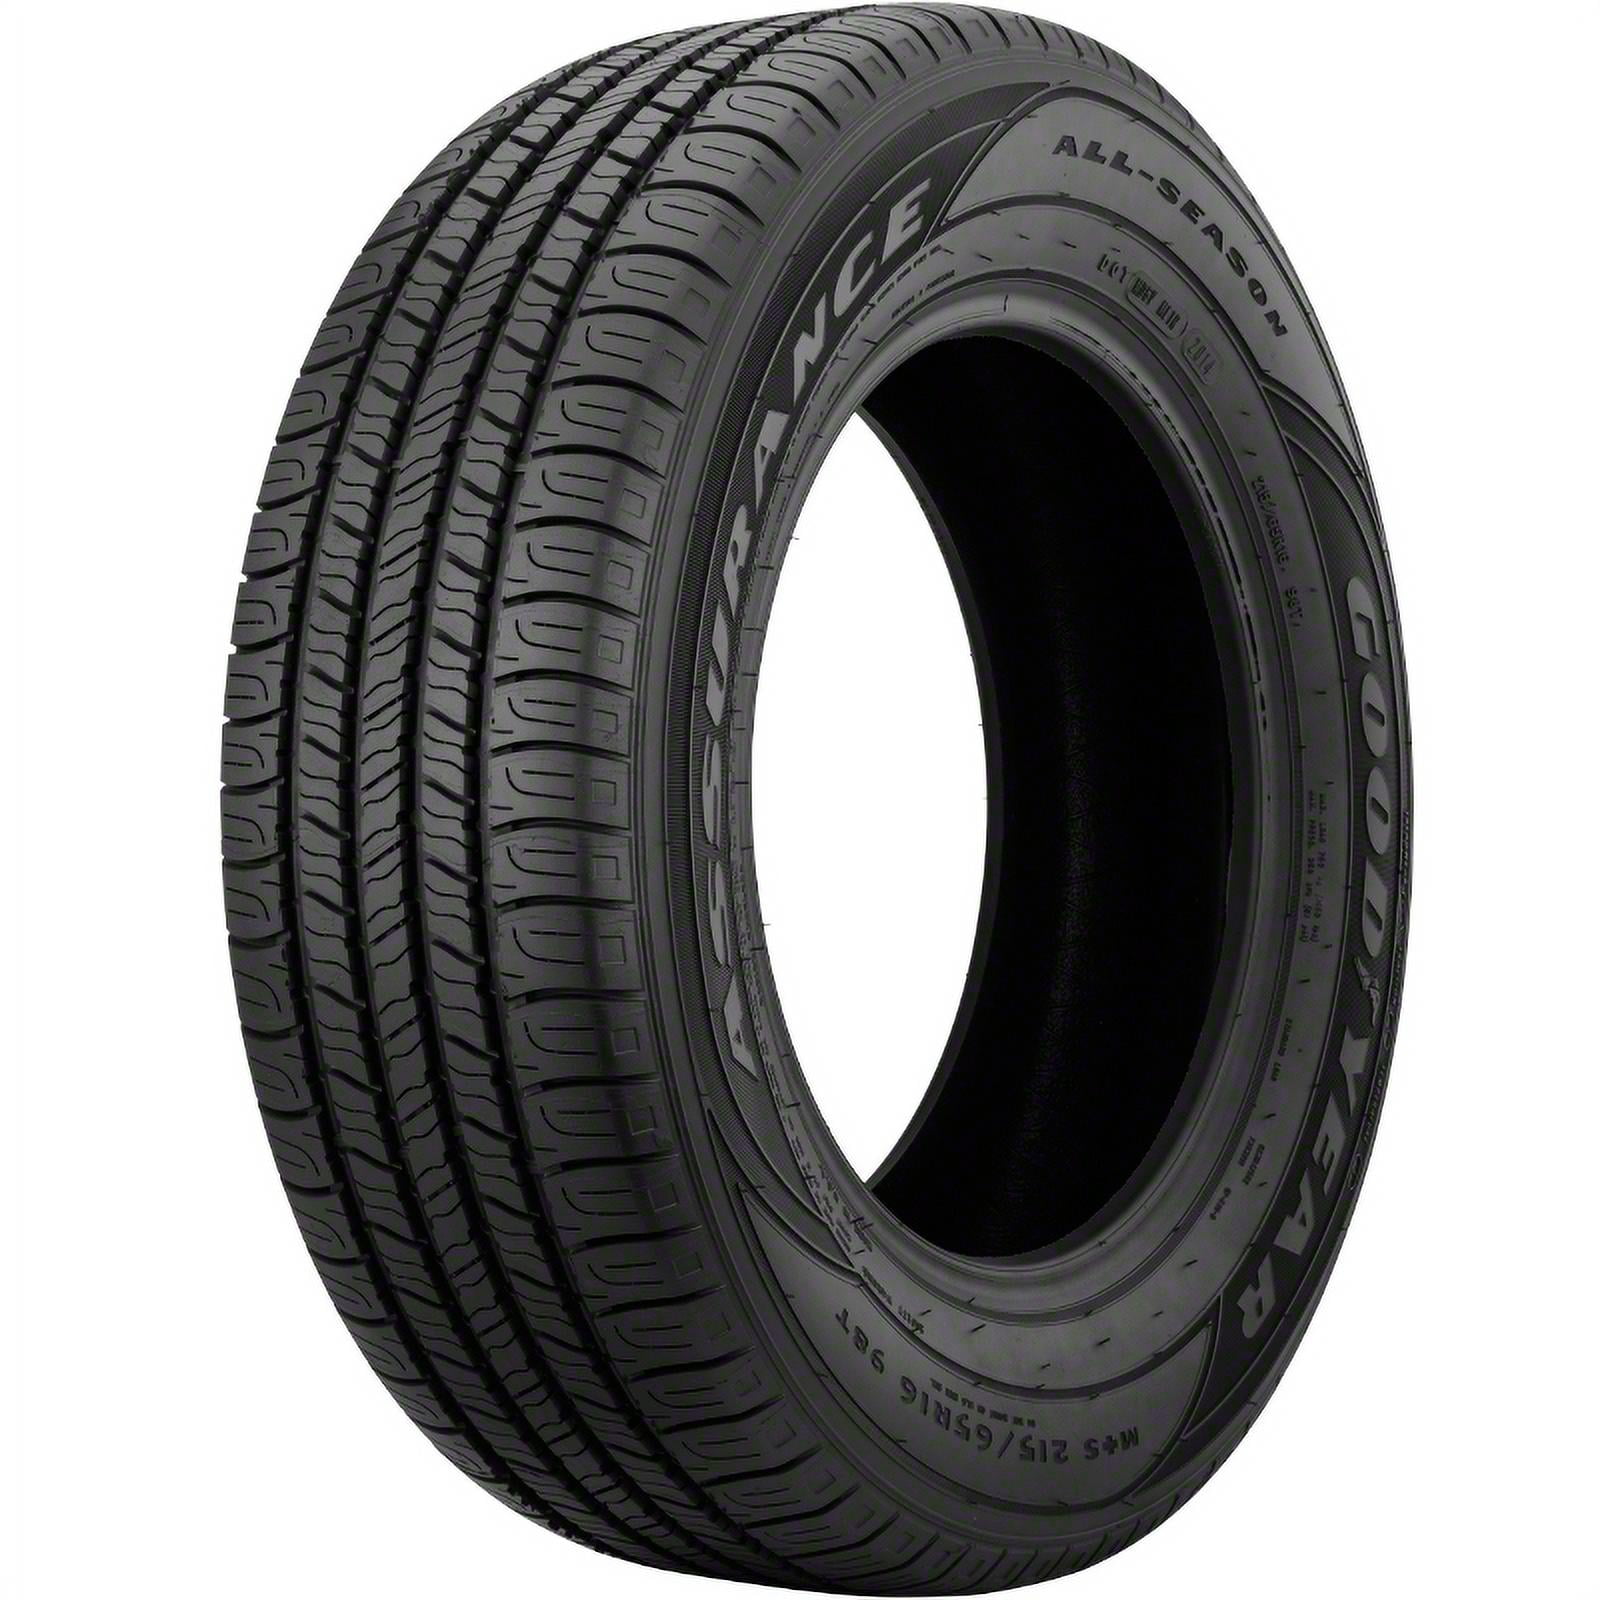 Goodyear Assurance All-Season 205/60R15 91 T Tire